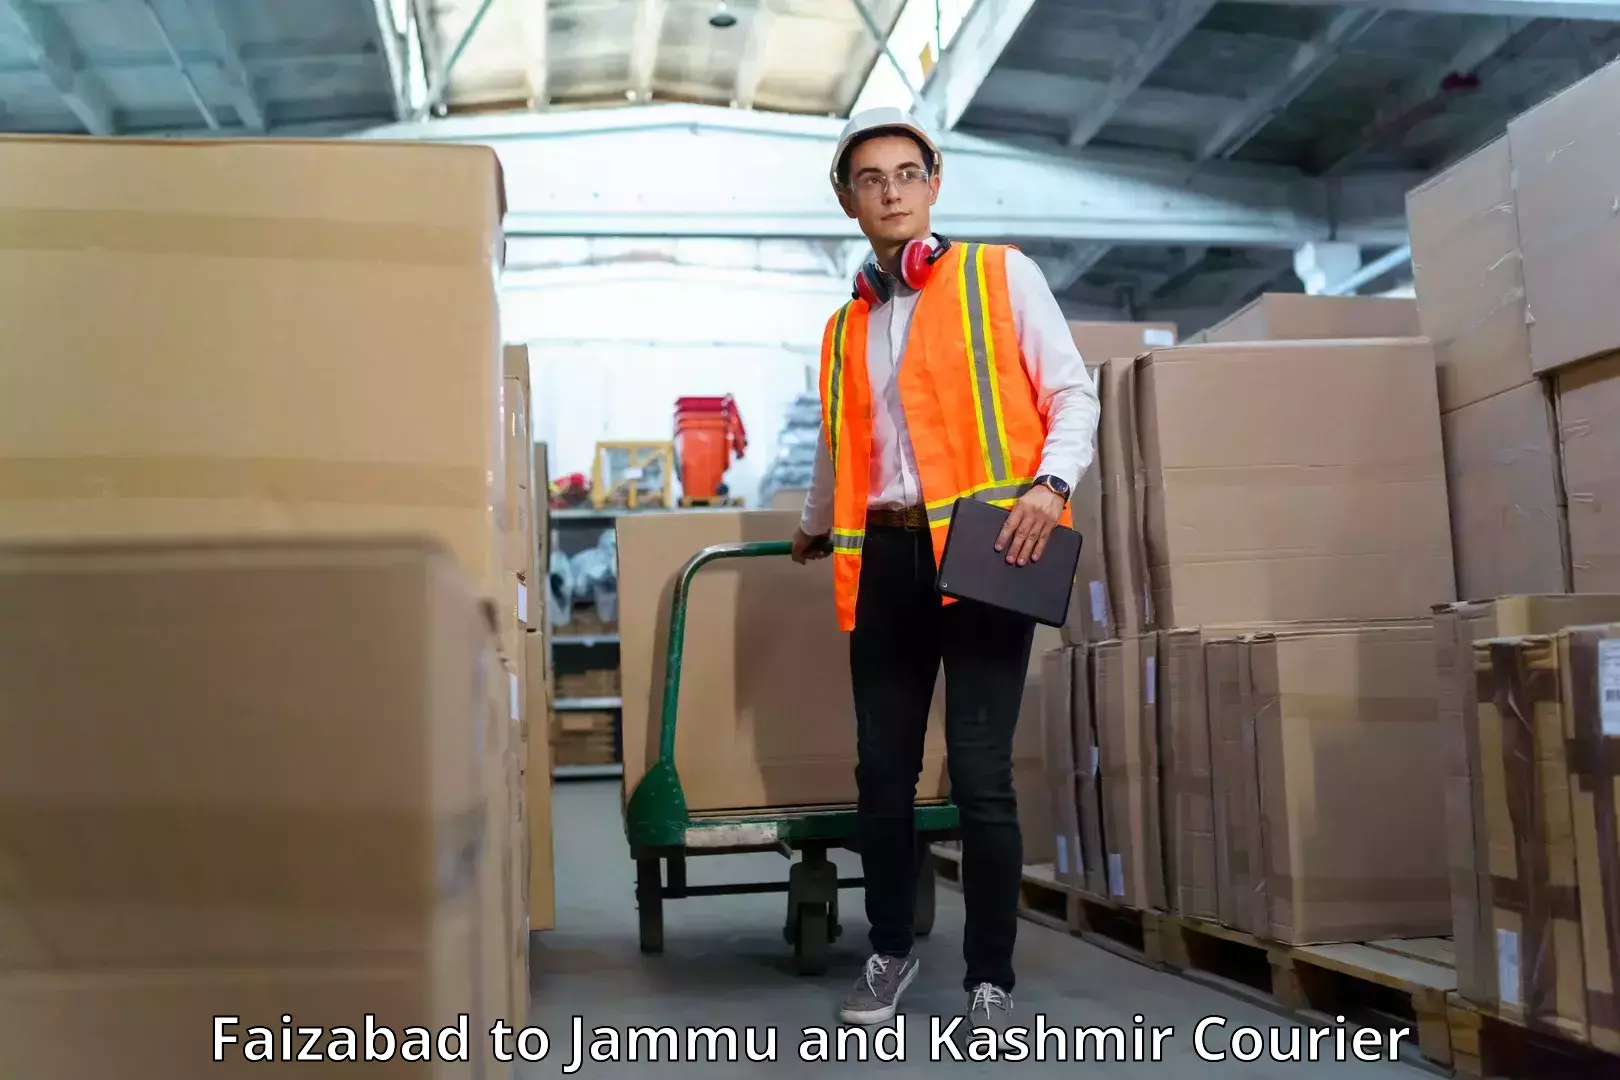 Reliable courier service Faizabad to Srinagar Kashmir